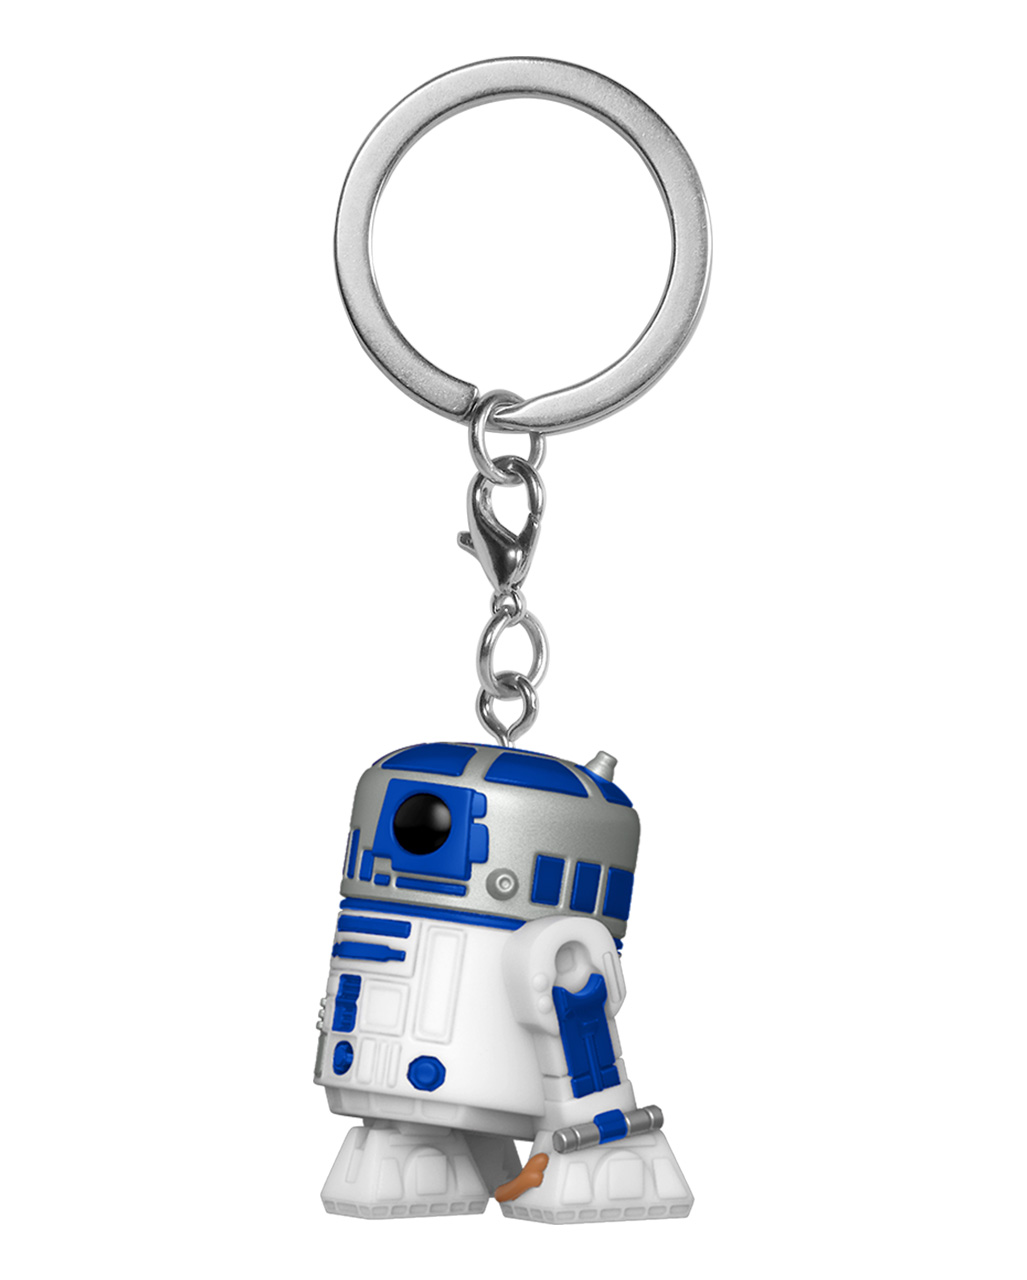 Funko Pocket POP Keychain Star Wars Stormtrooper